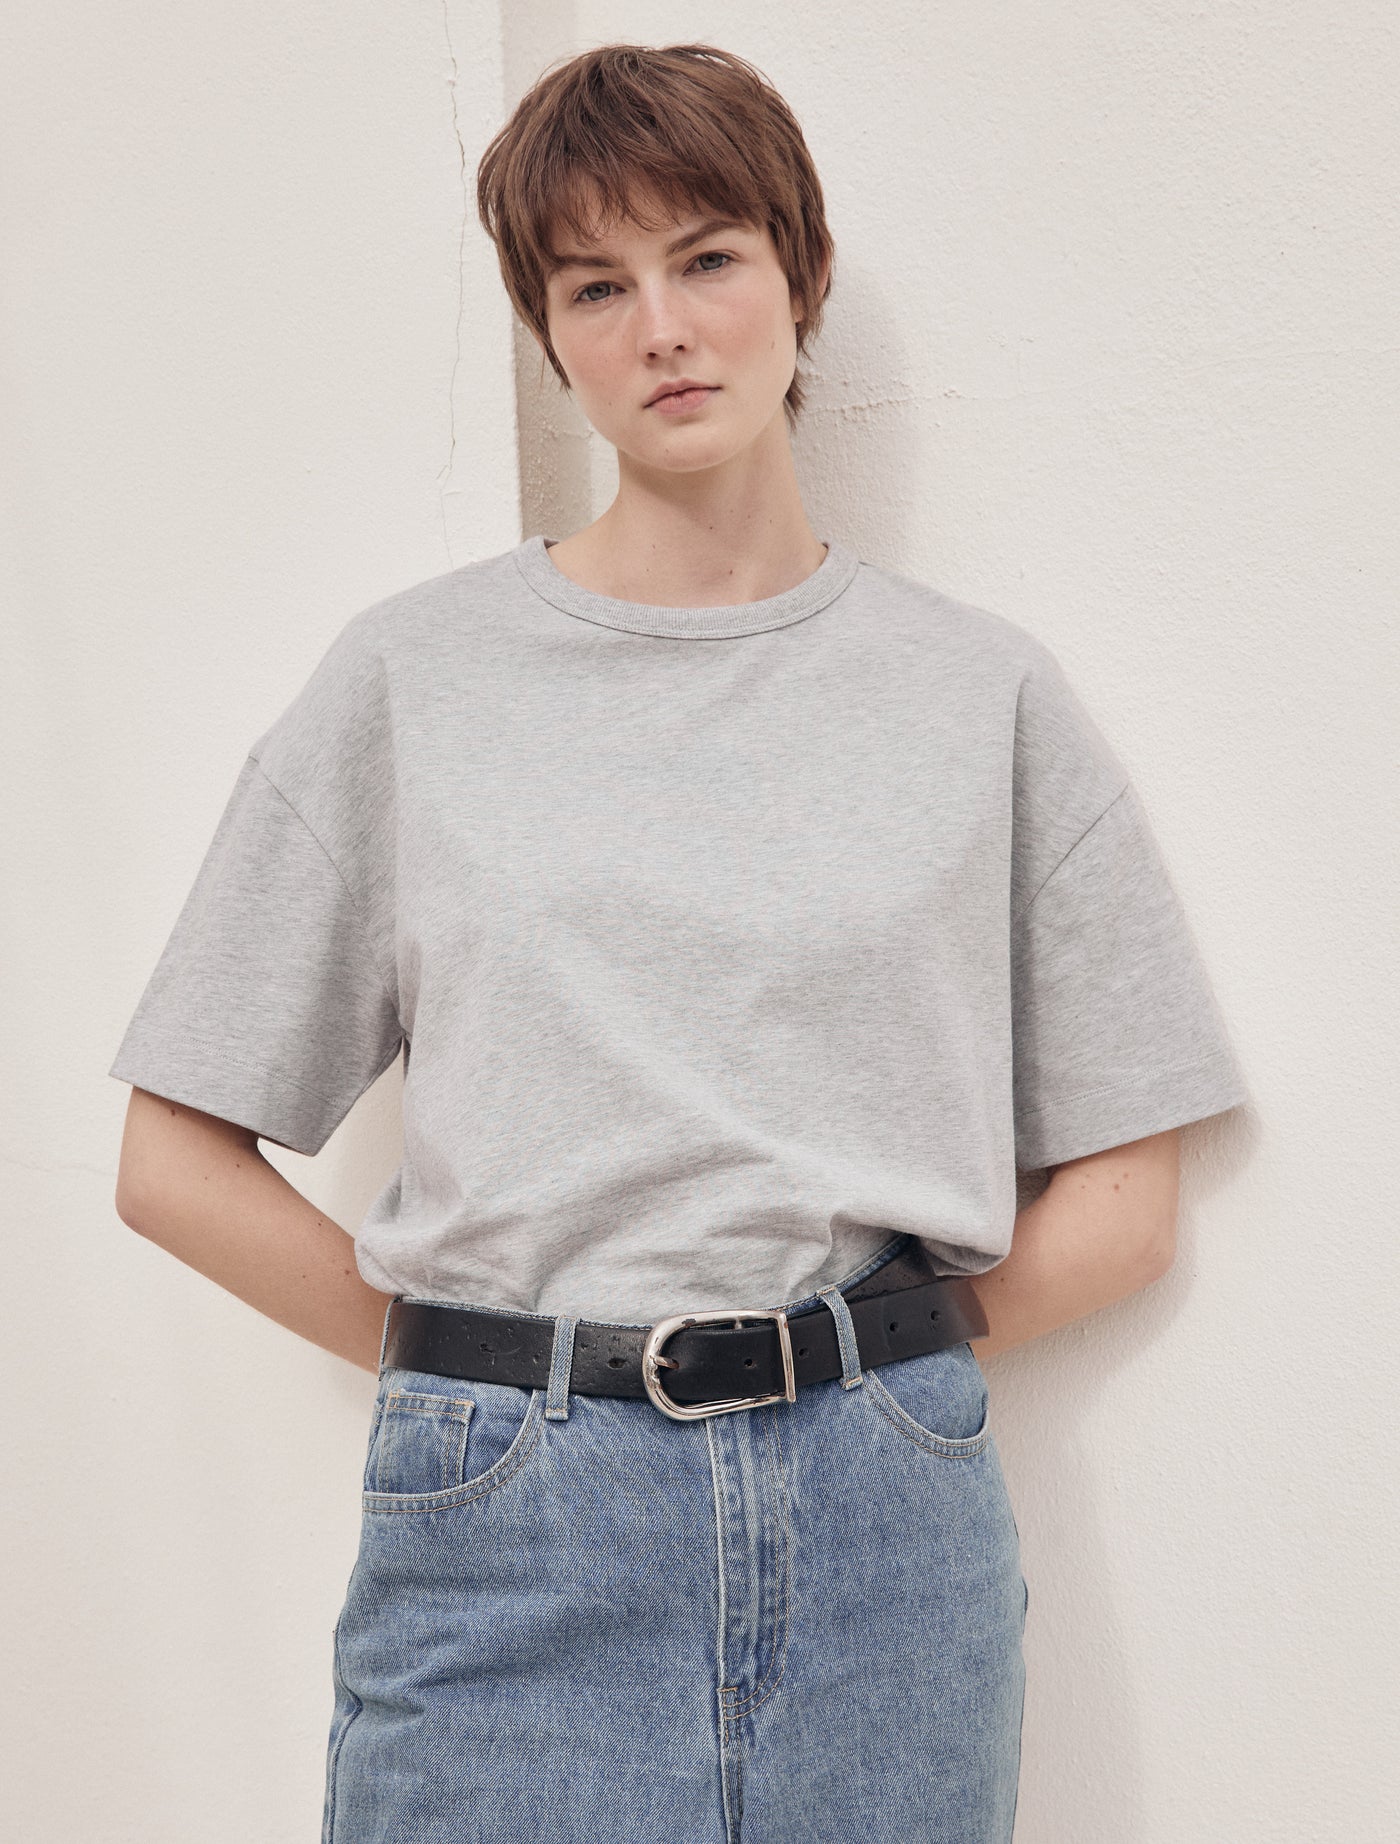 Lena Oversized T-Shirt in Grey Marl